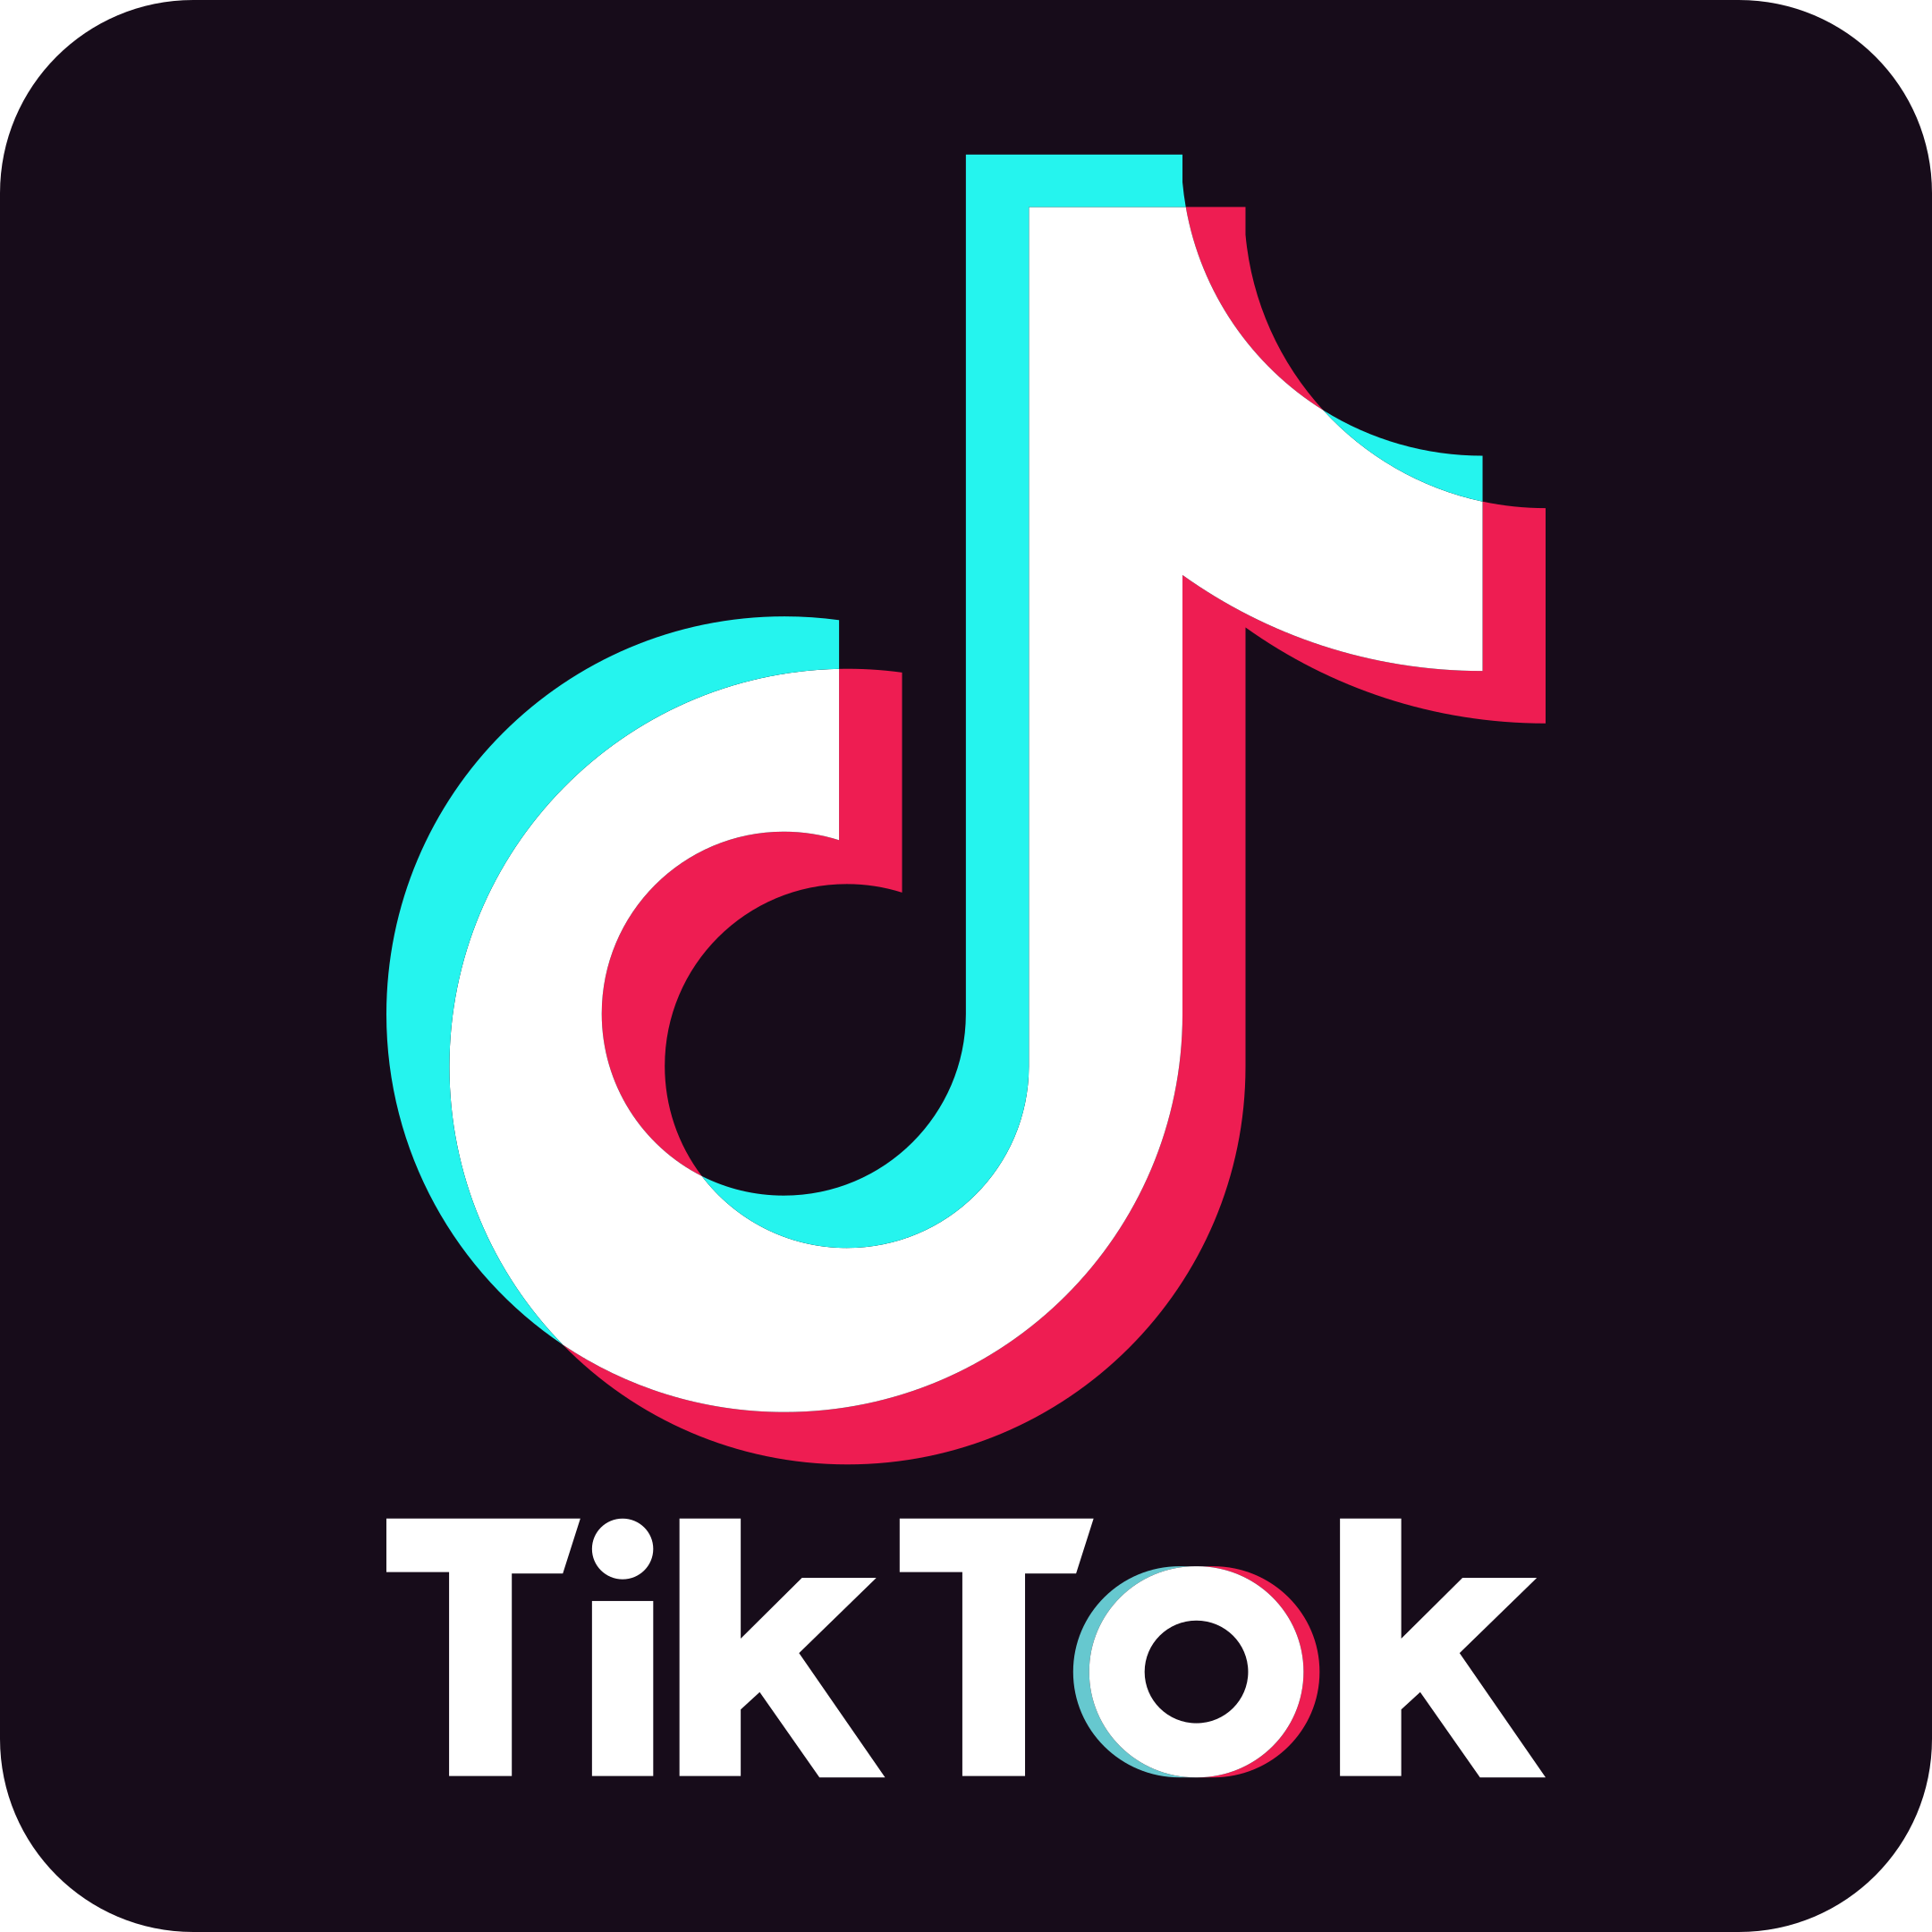 Popular Tiktok icon in modern round black glass web on ... |Tiktok Vector